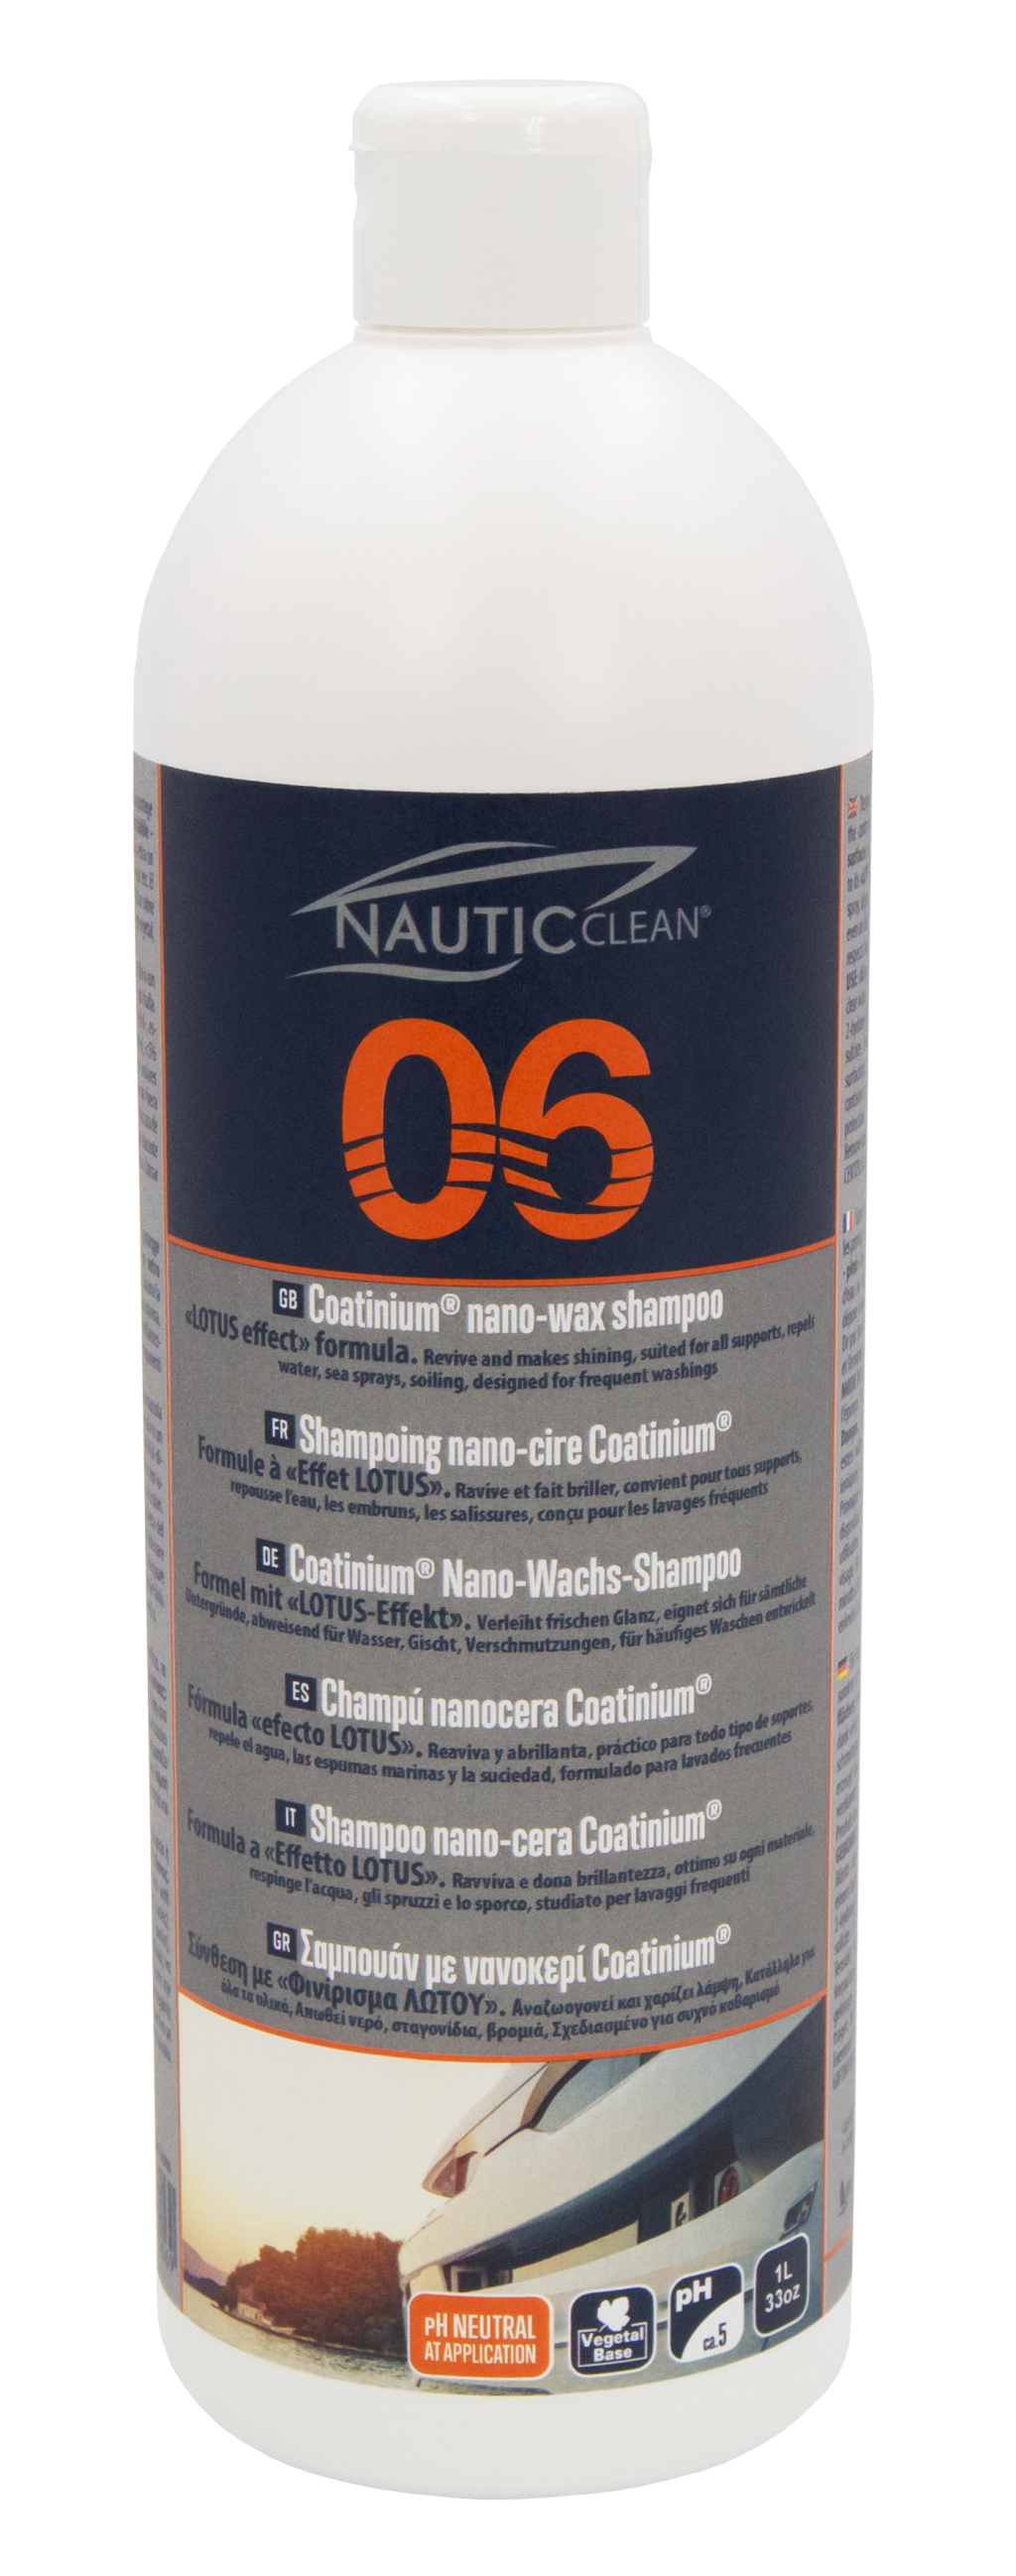 06 Coatinium® Nano-wax Shampoo - Nano šampon za pranje